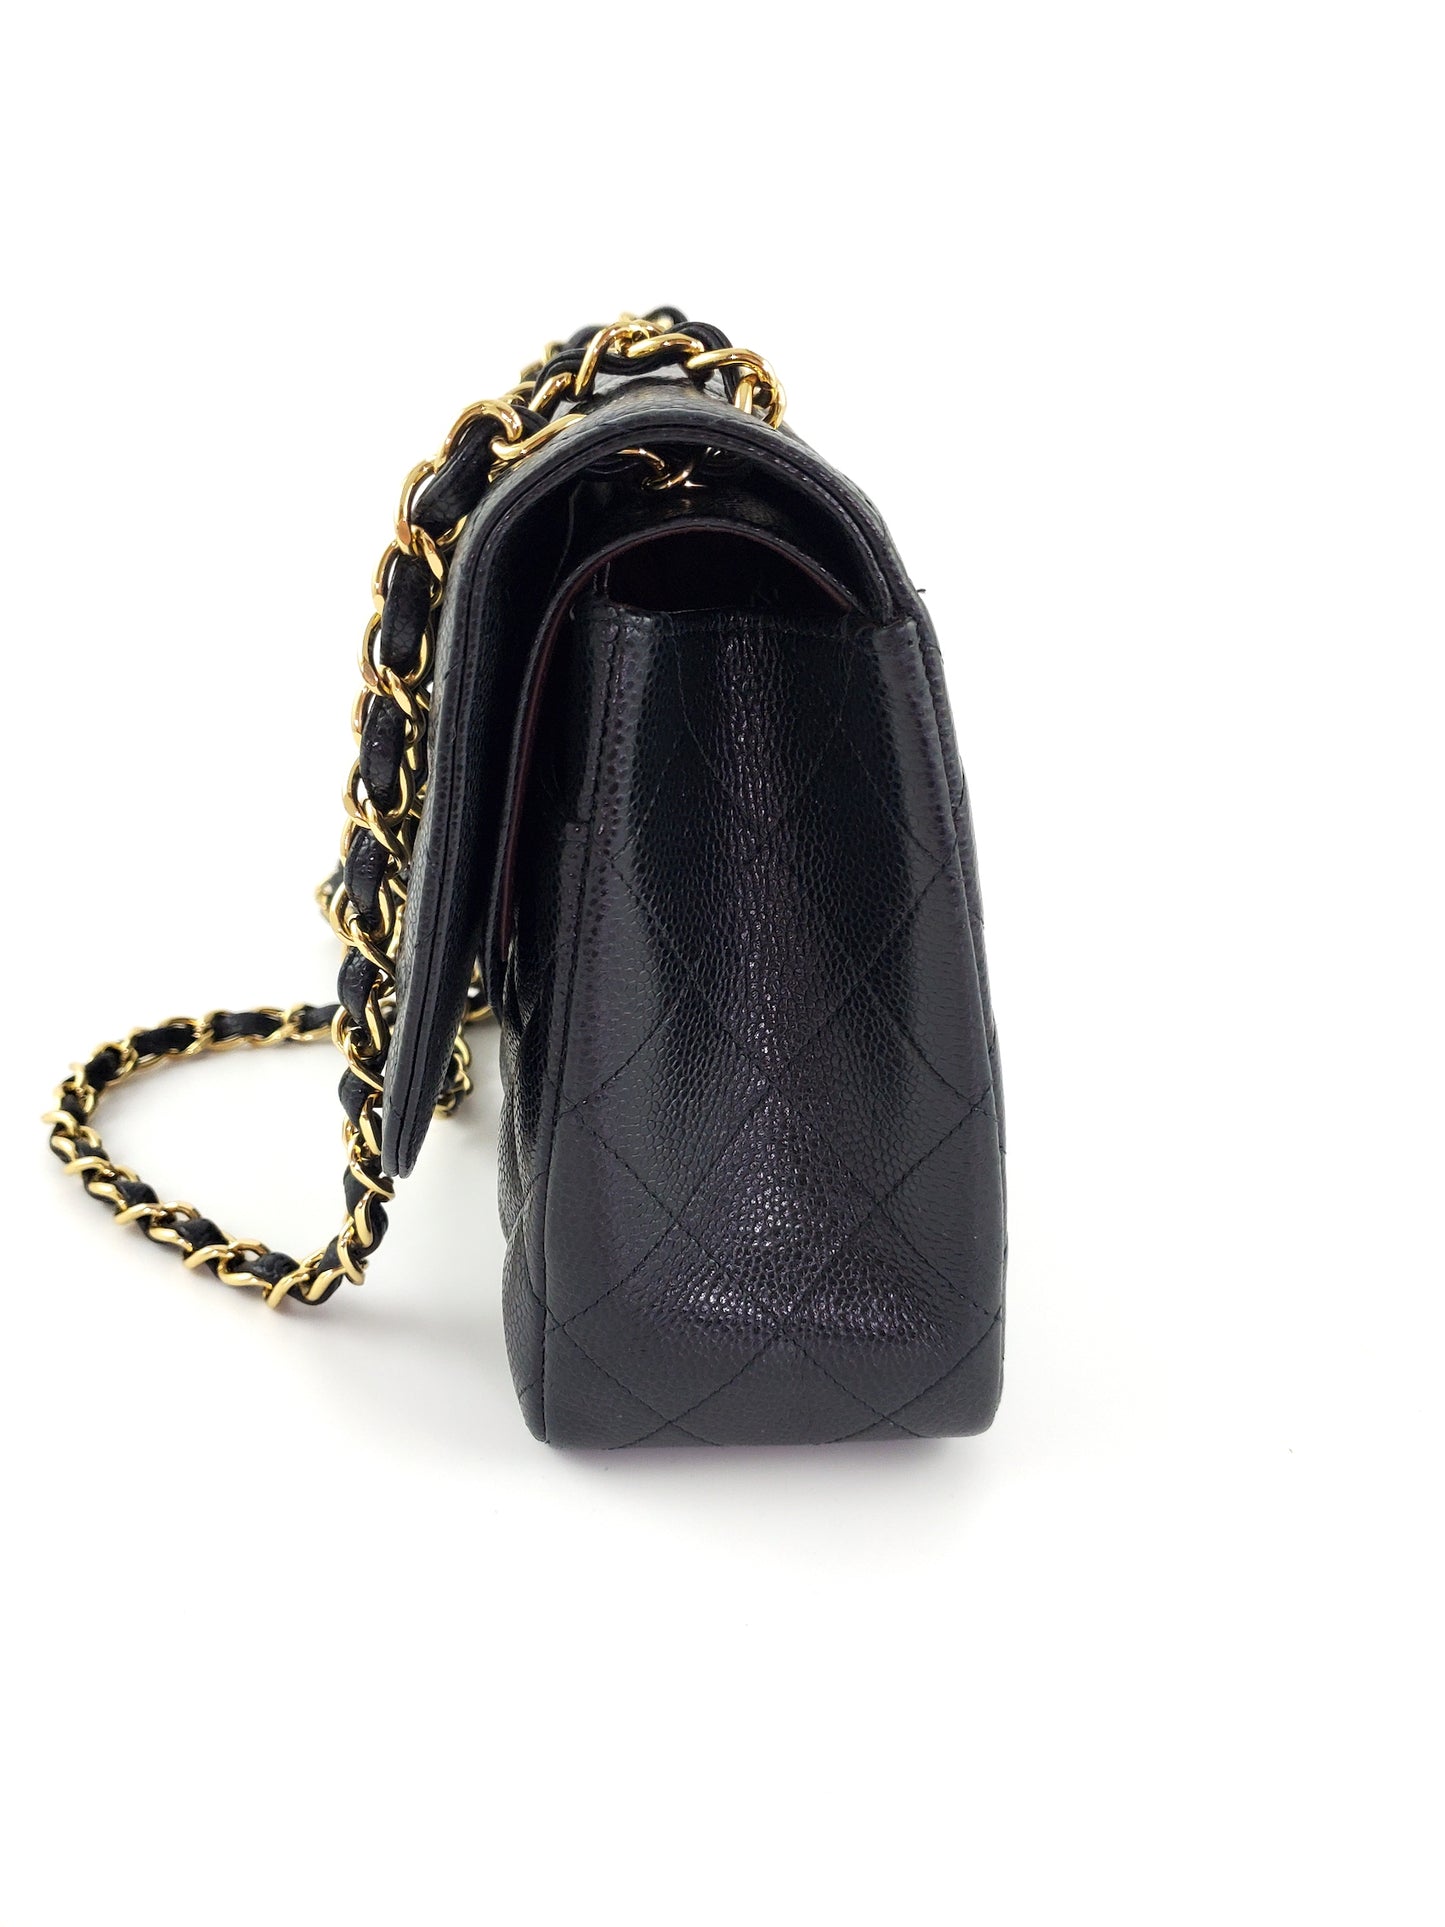 CHANEL Black Caviar Jumbo Classic Double Flap Bag